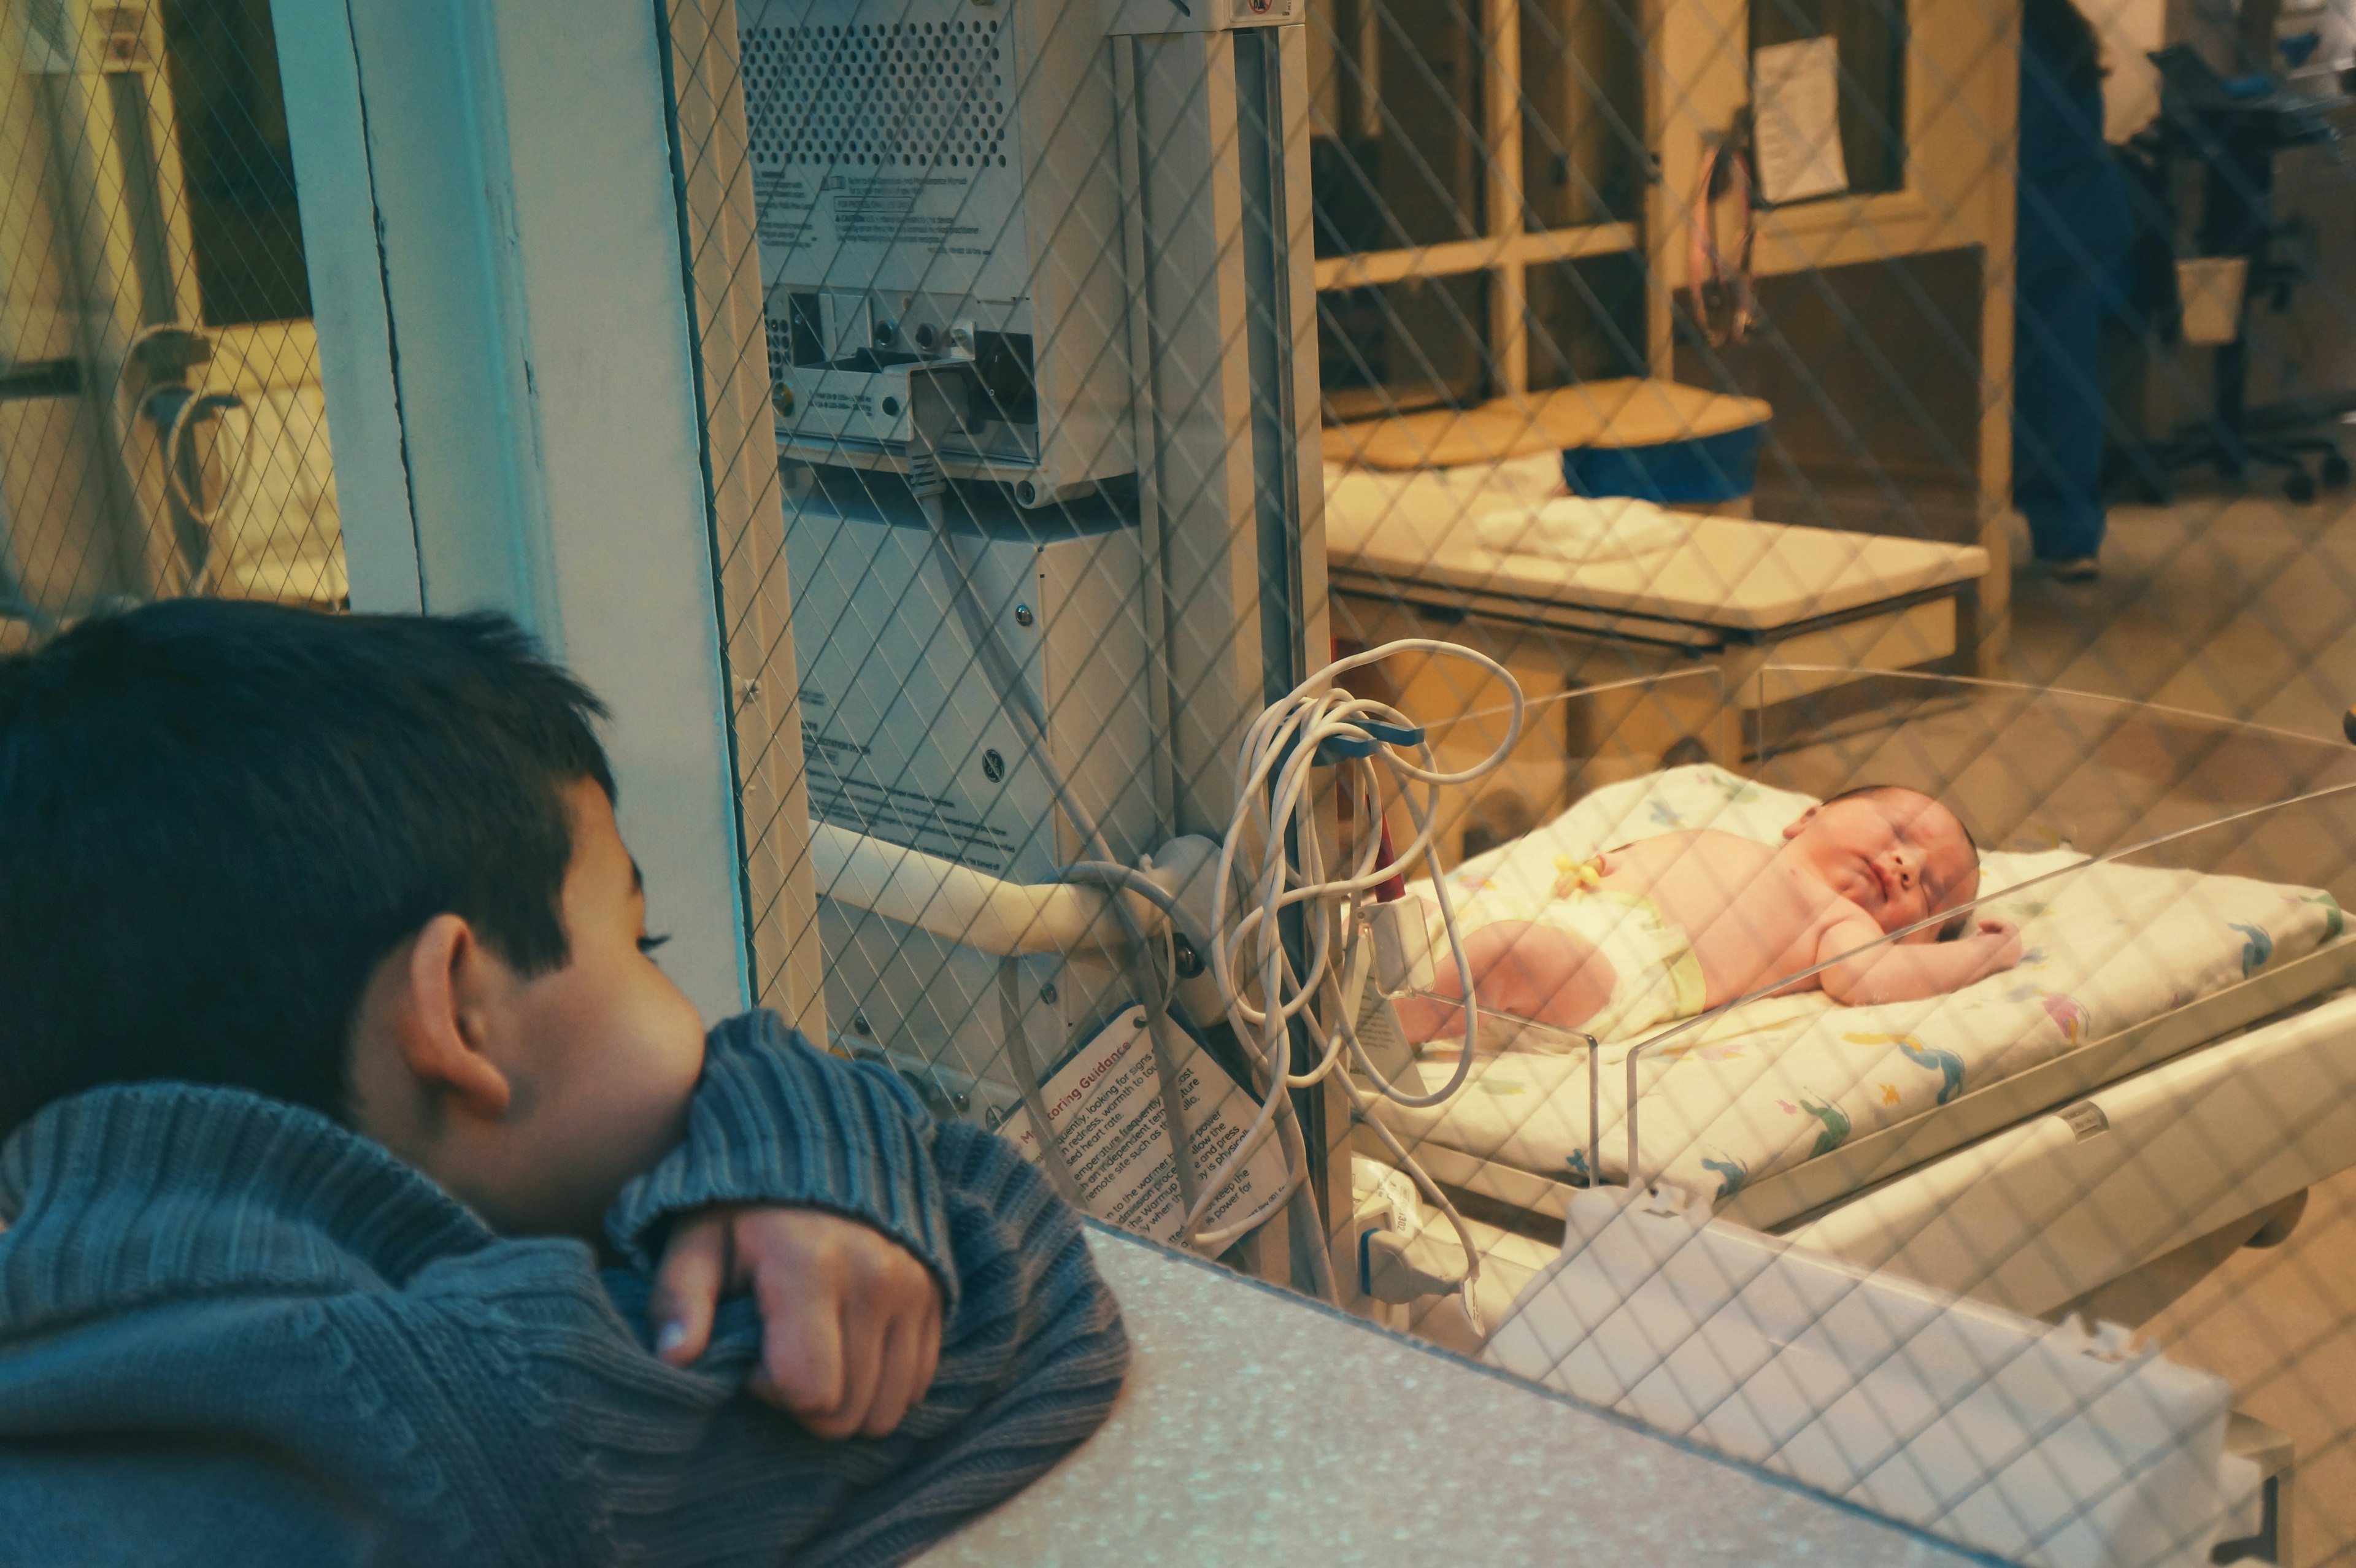 A child looks through a glass window at a newborn in a bassinet